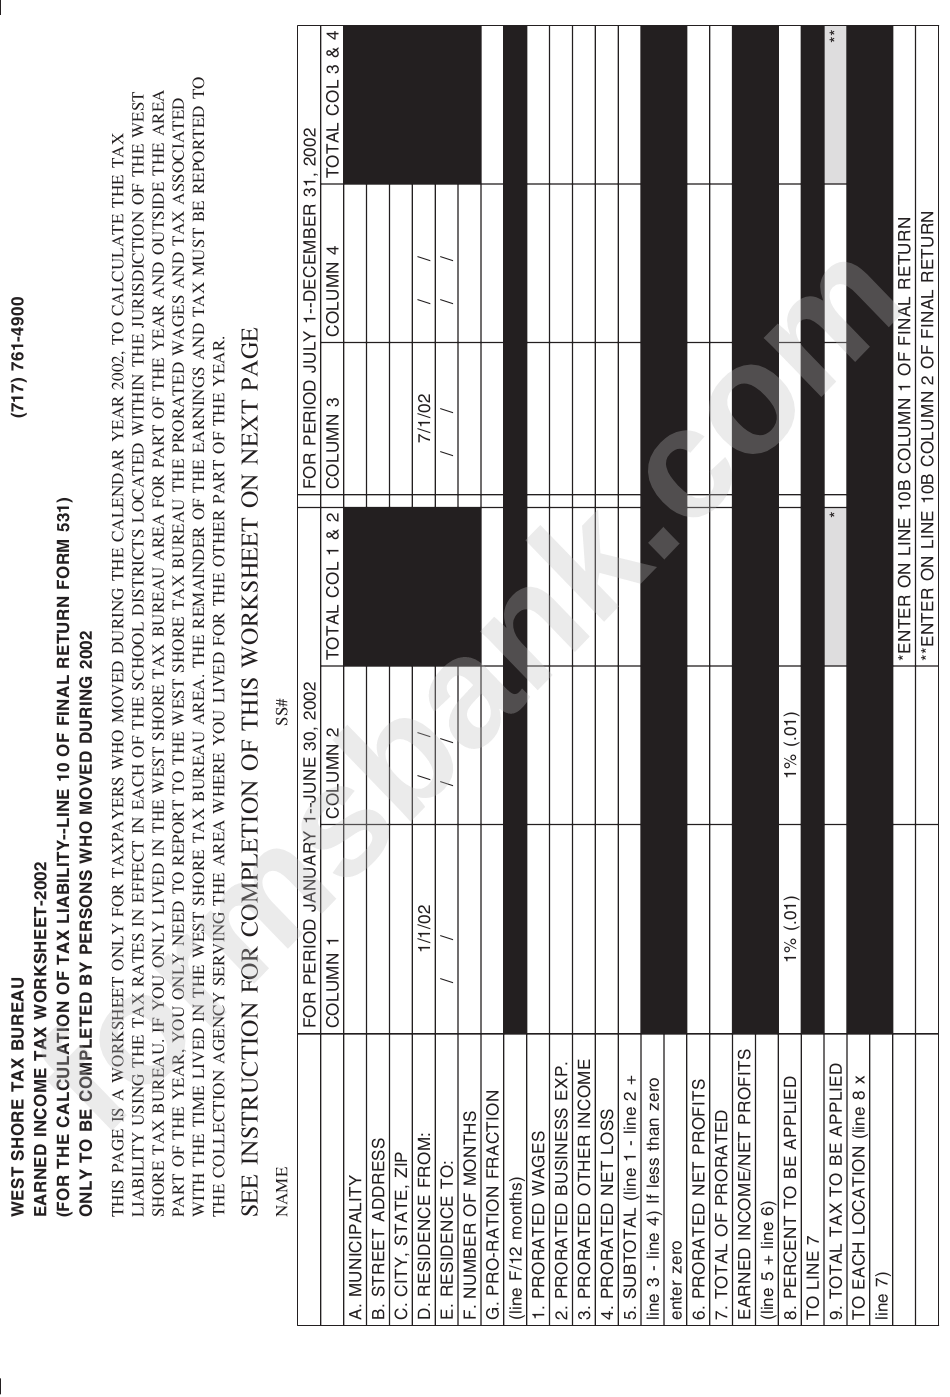 Final Return For Earned Income Tax - West Shore Tax Bureau Form 2002